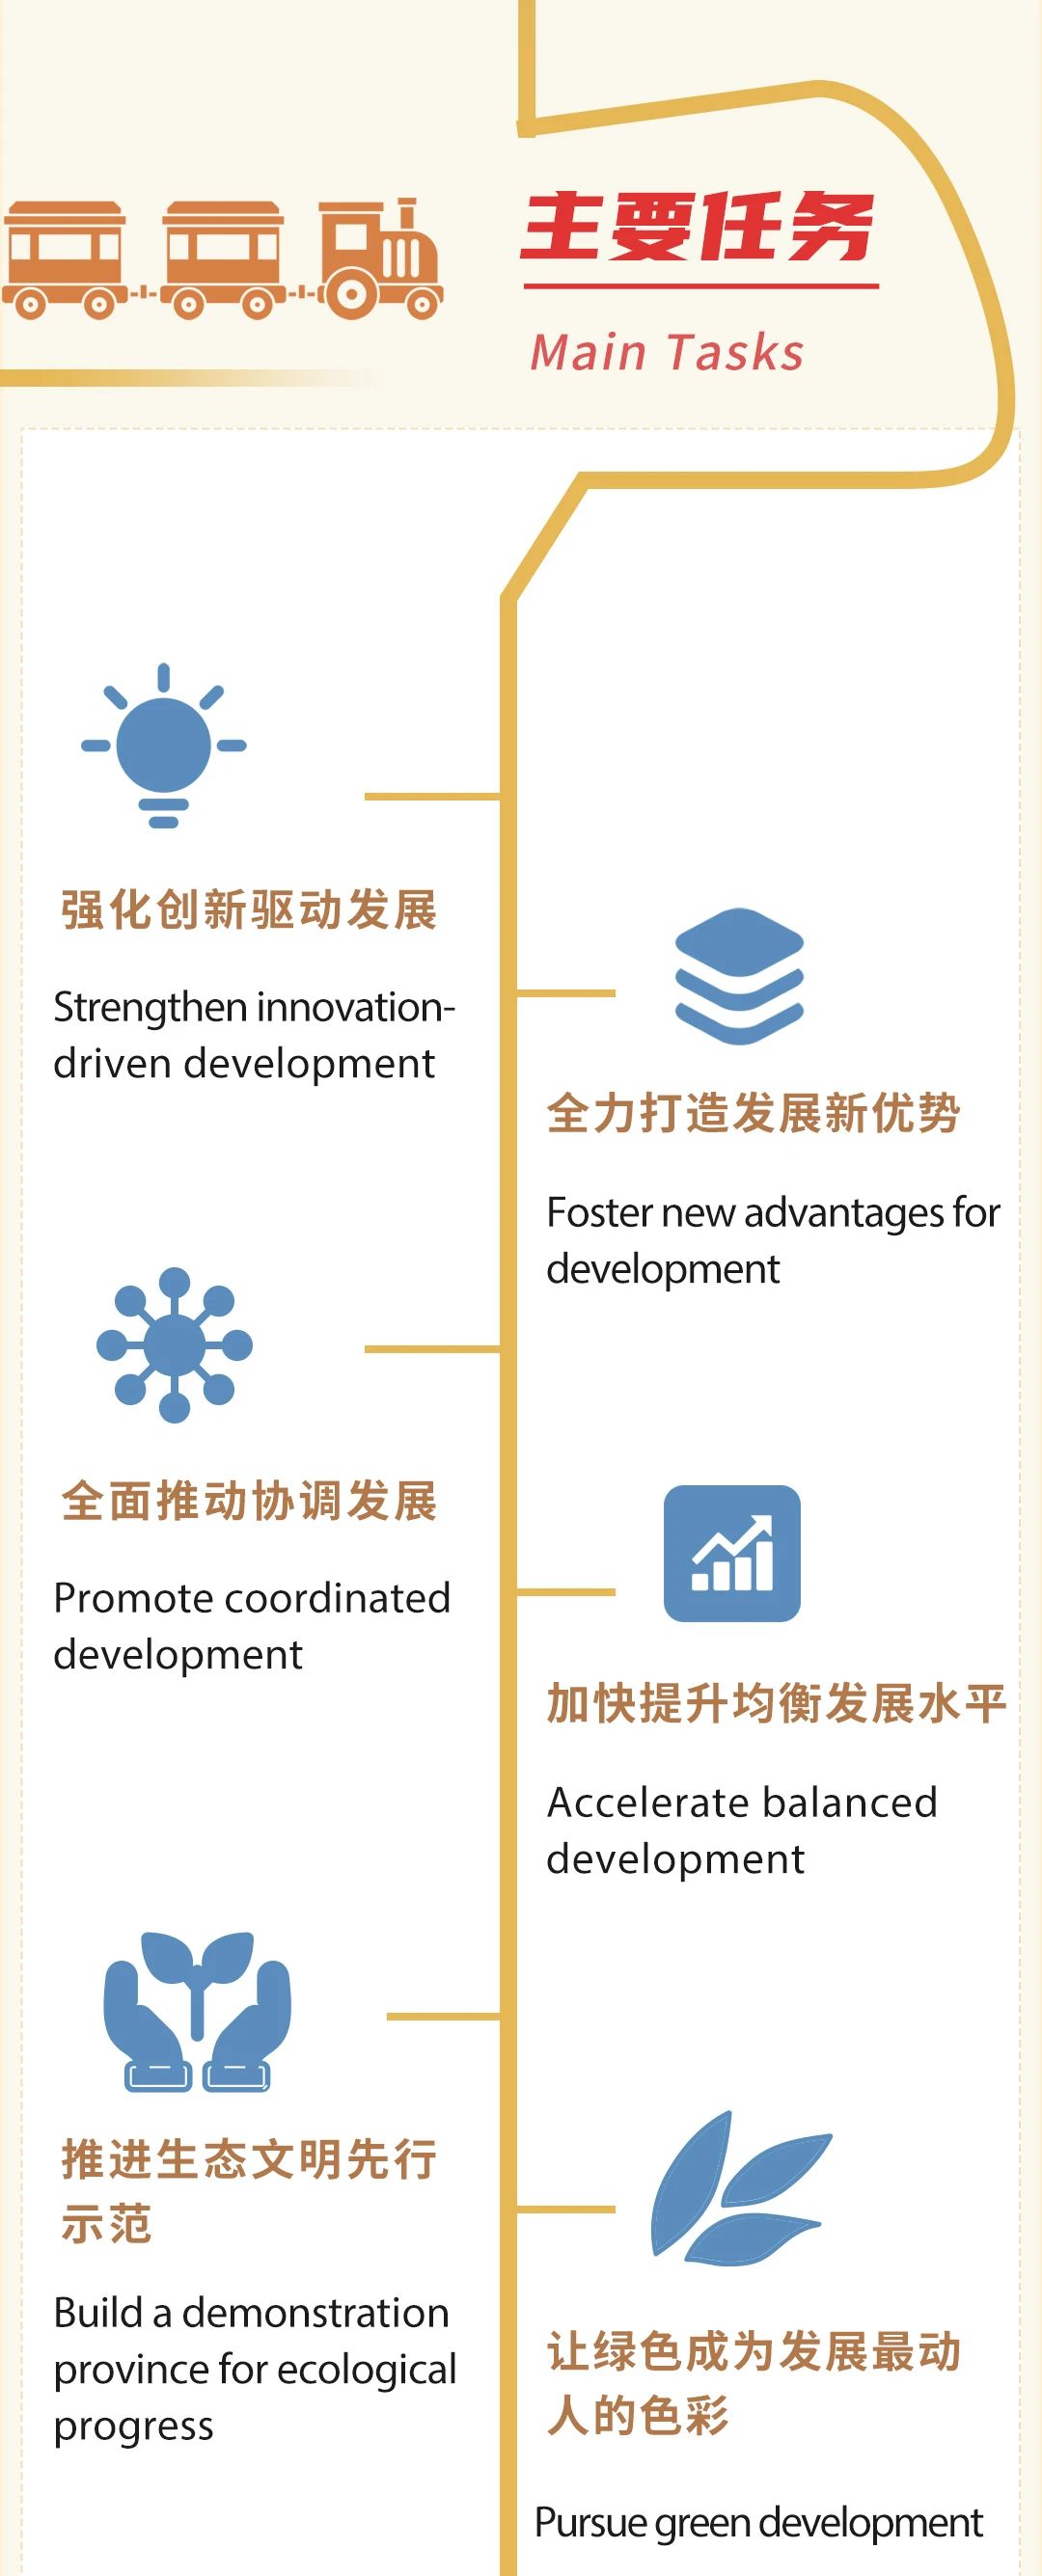 Zhejiang Govt Report 14th Five Year Plan 4.jpg